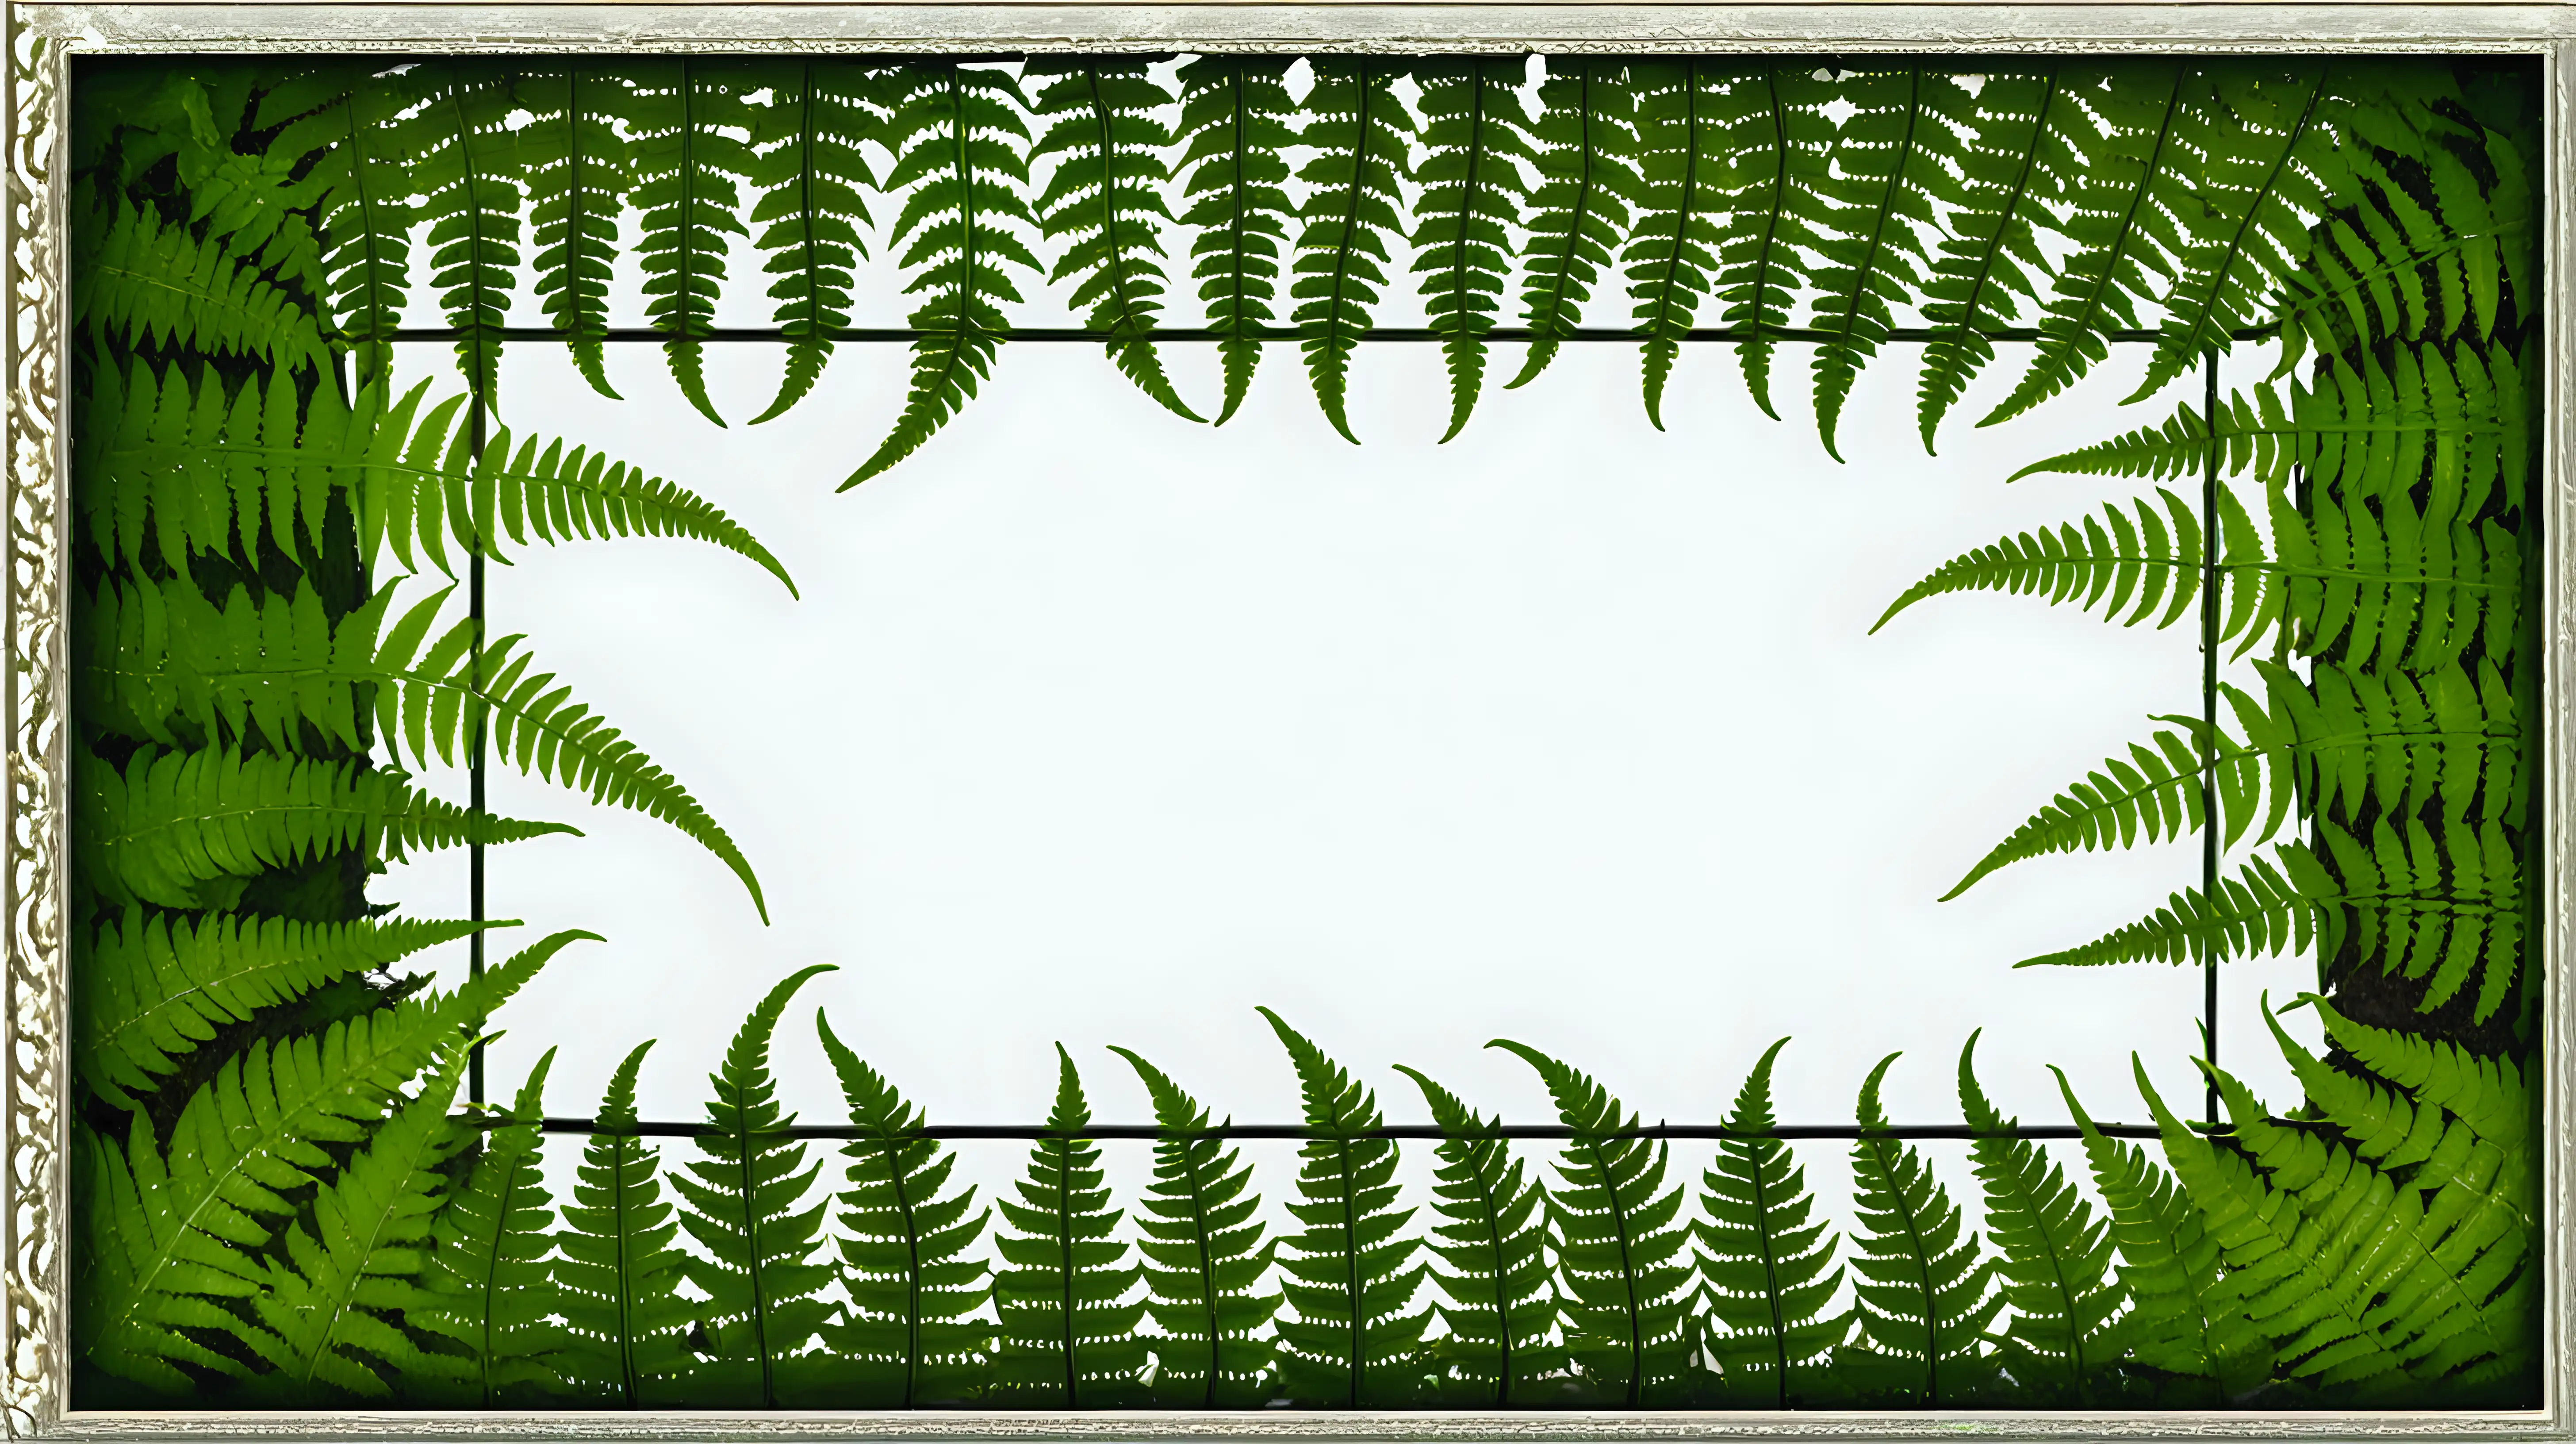 Tranquil Fern Plants within Elegant Frame